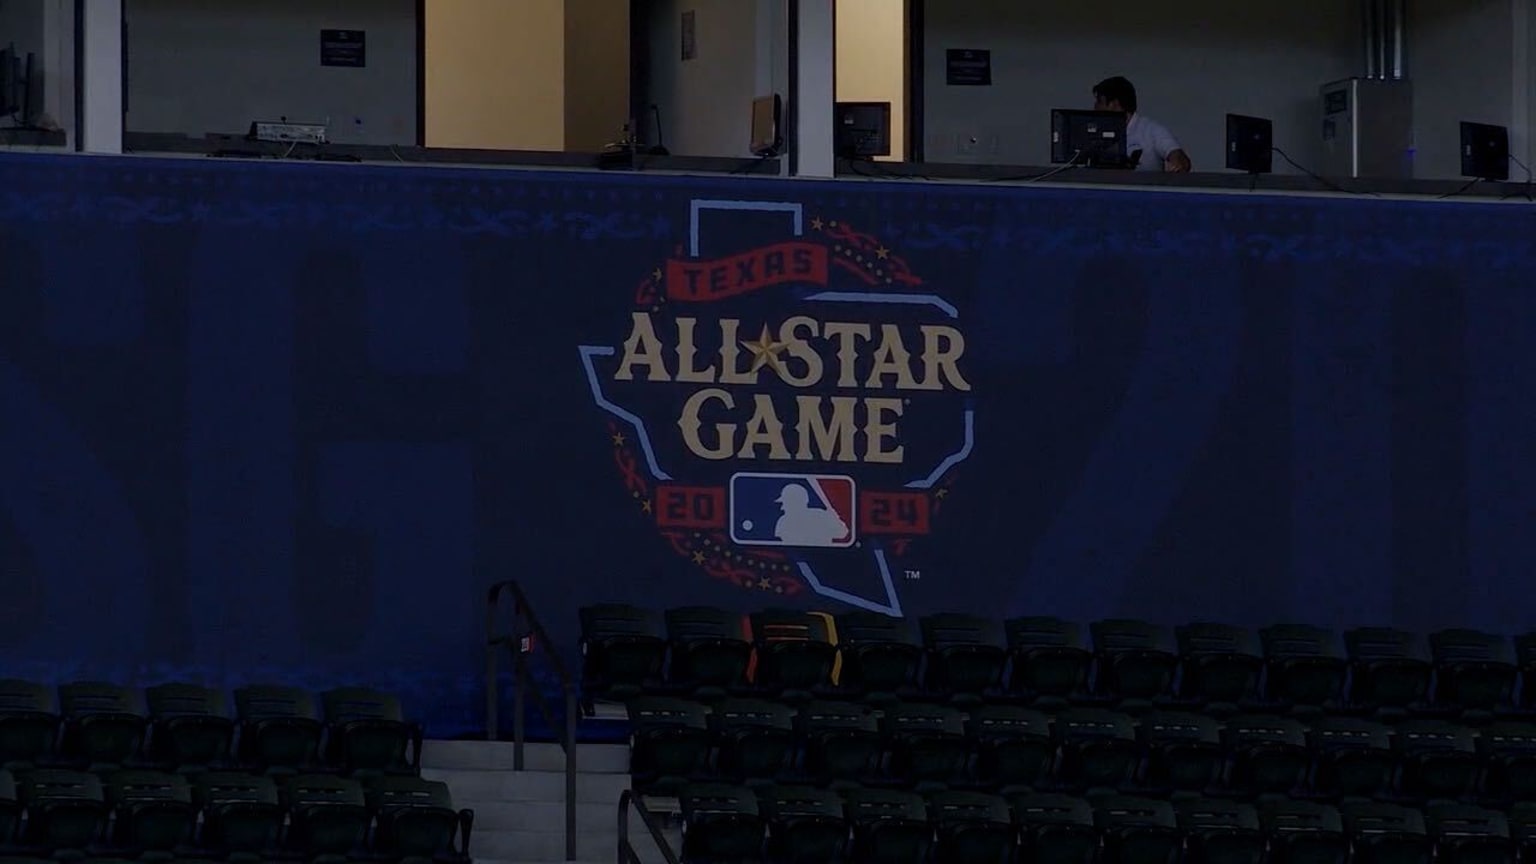 Apply, MLB All-Star Experience Team